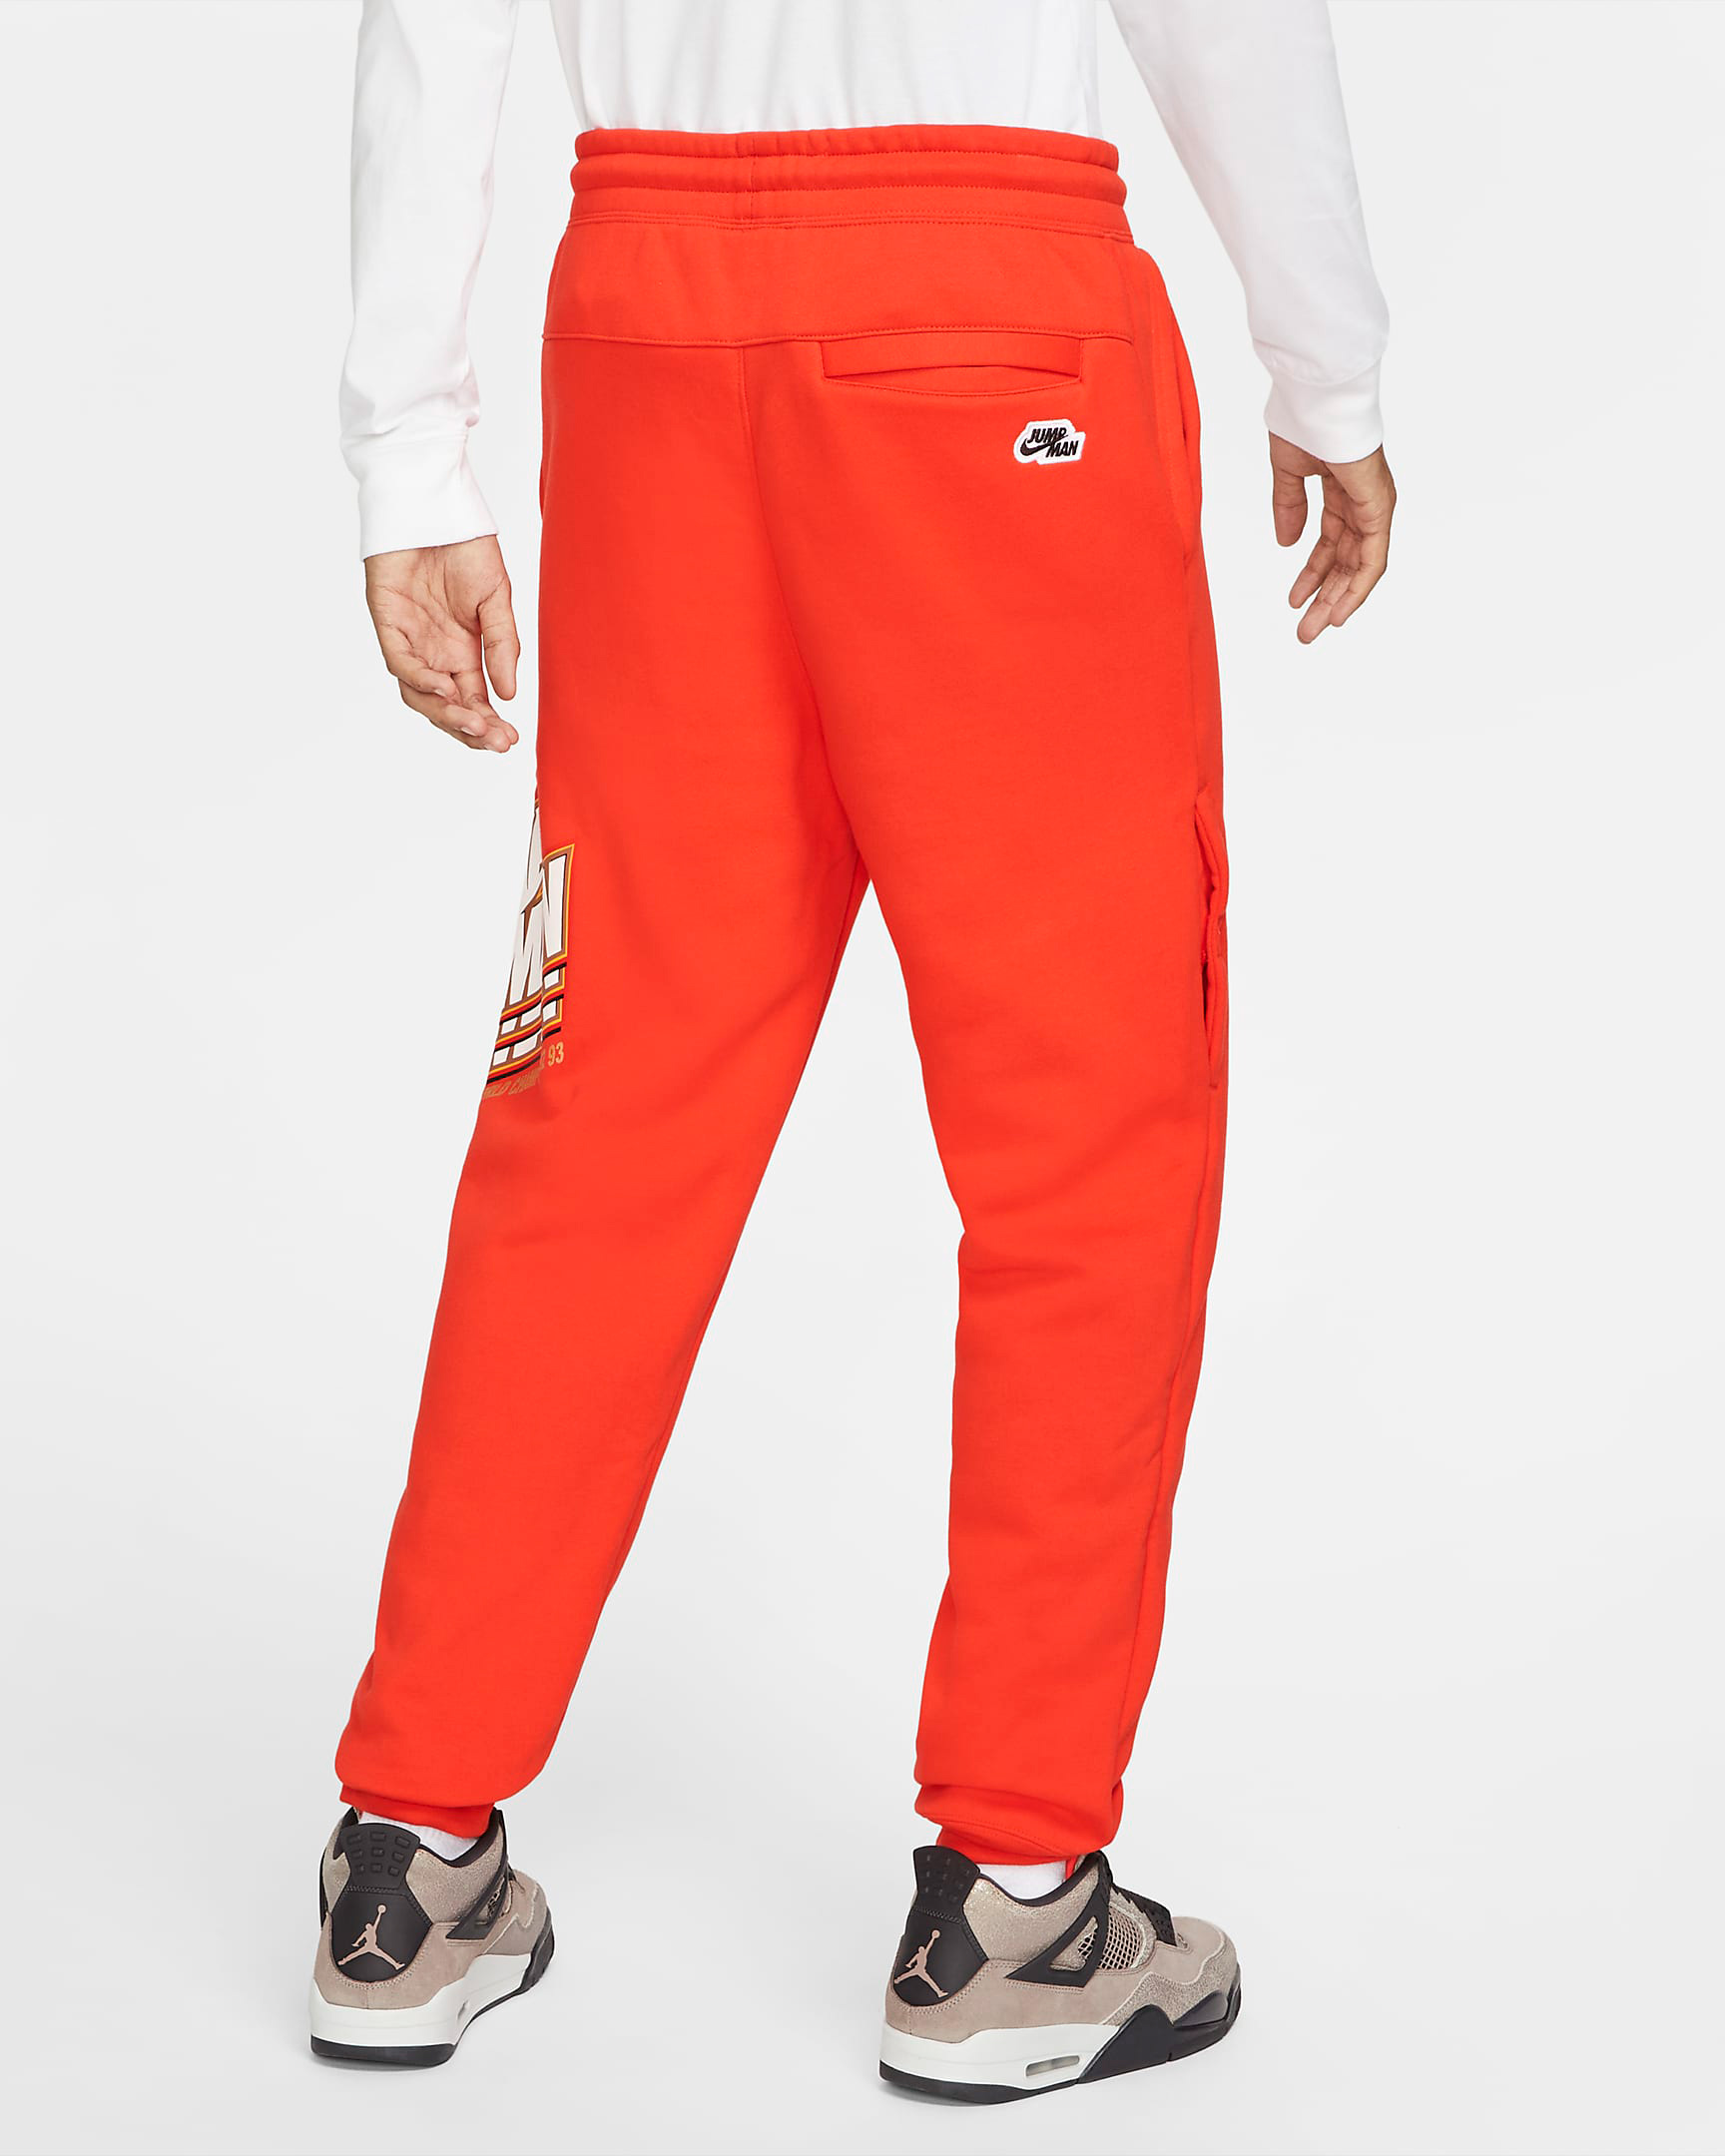 jordan-chile-red-jumpman-fleece-pants-2